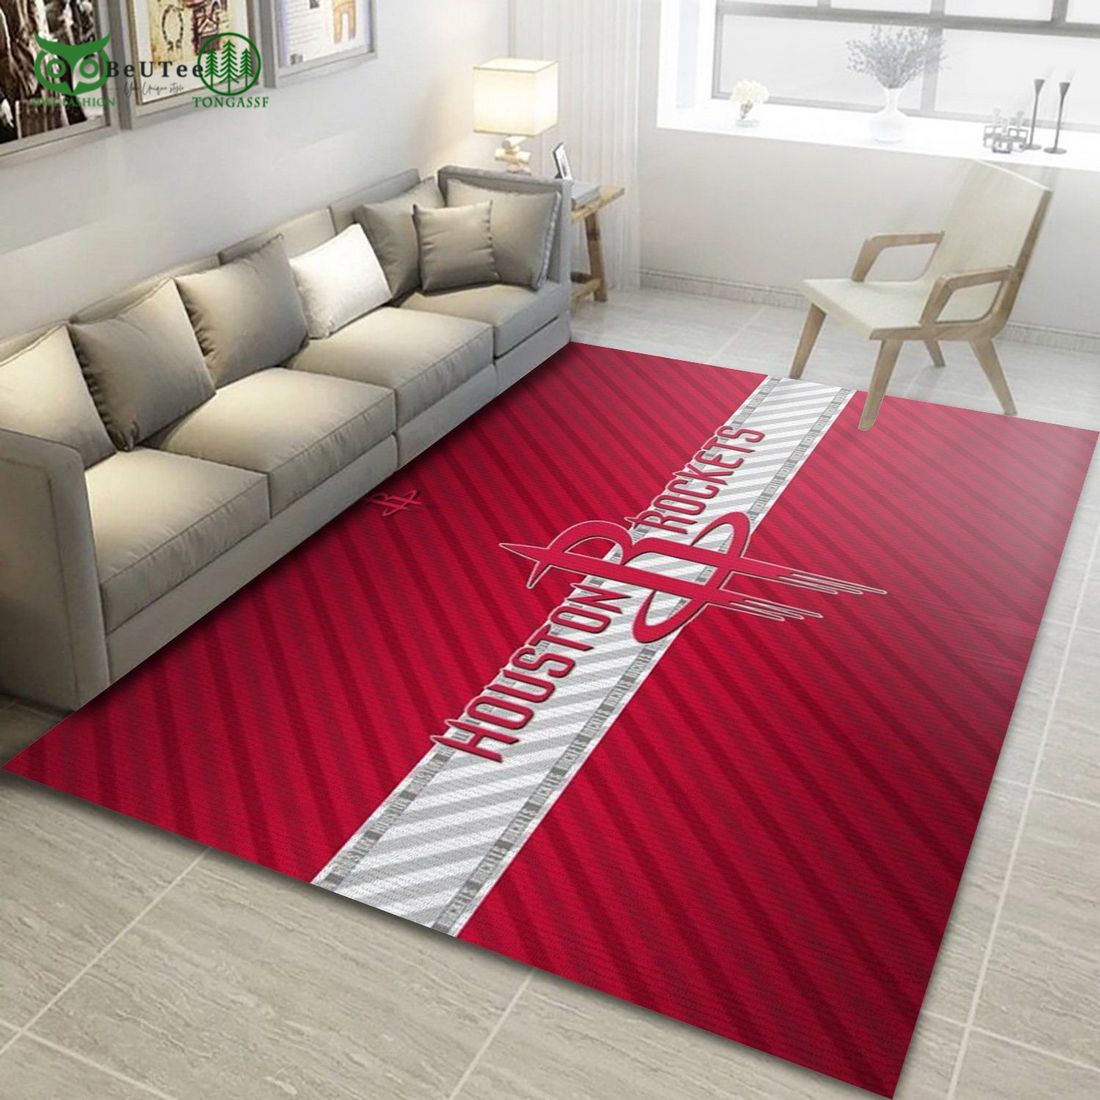 houston rockets logo team red living room nba carpet rug 1 toNEO